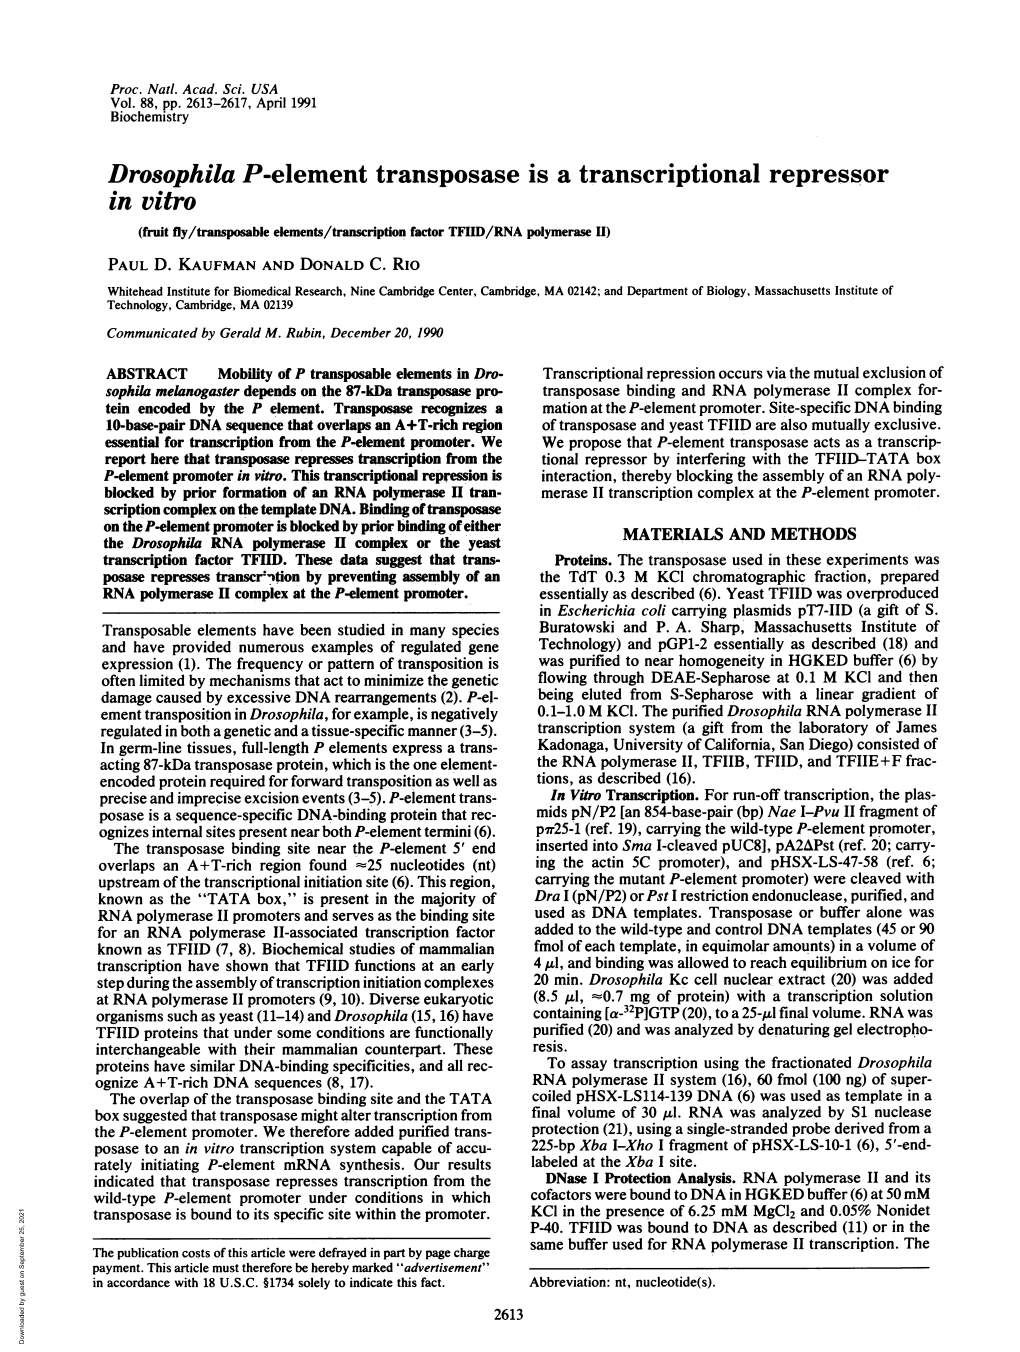 Drosophila P-Element Transposase Is a Transcriptional Repressor in Vitro (Fruit Fly/Transposable Elements/Transcription Factor TFIID/RNA Polymerase H) PAUL D